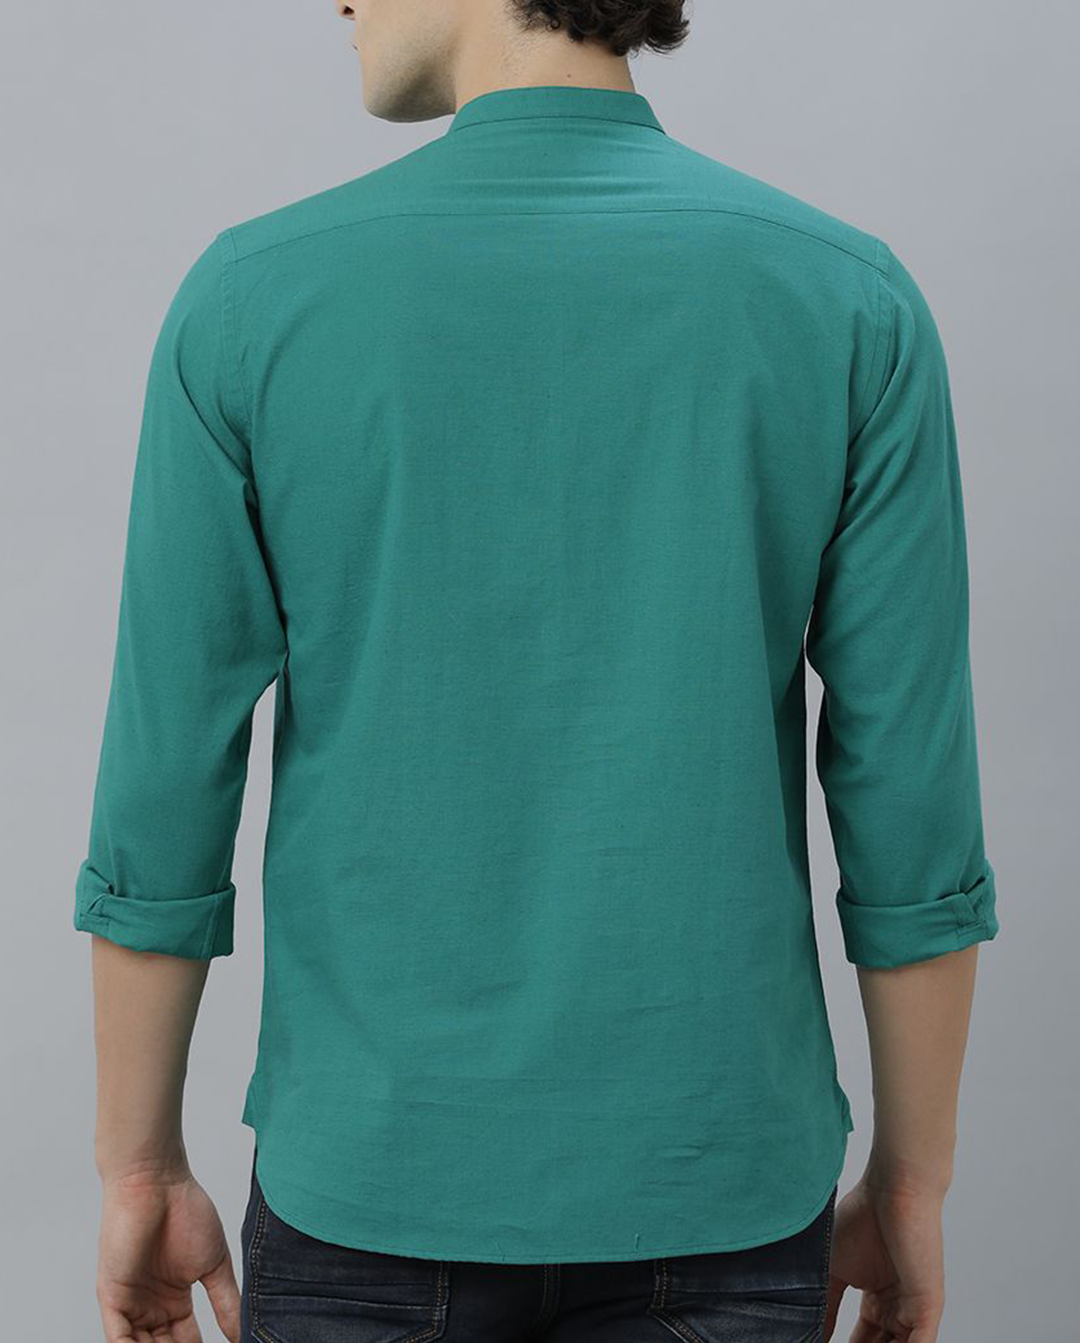 Full Sleeve Shirt with Mandarin Collar